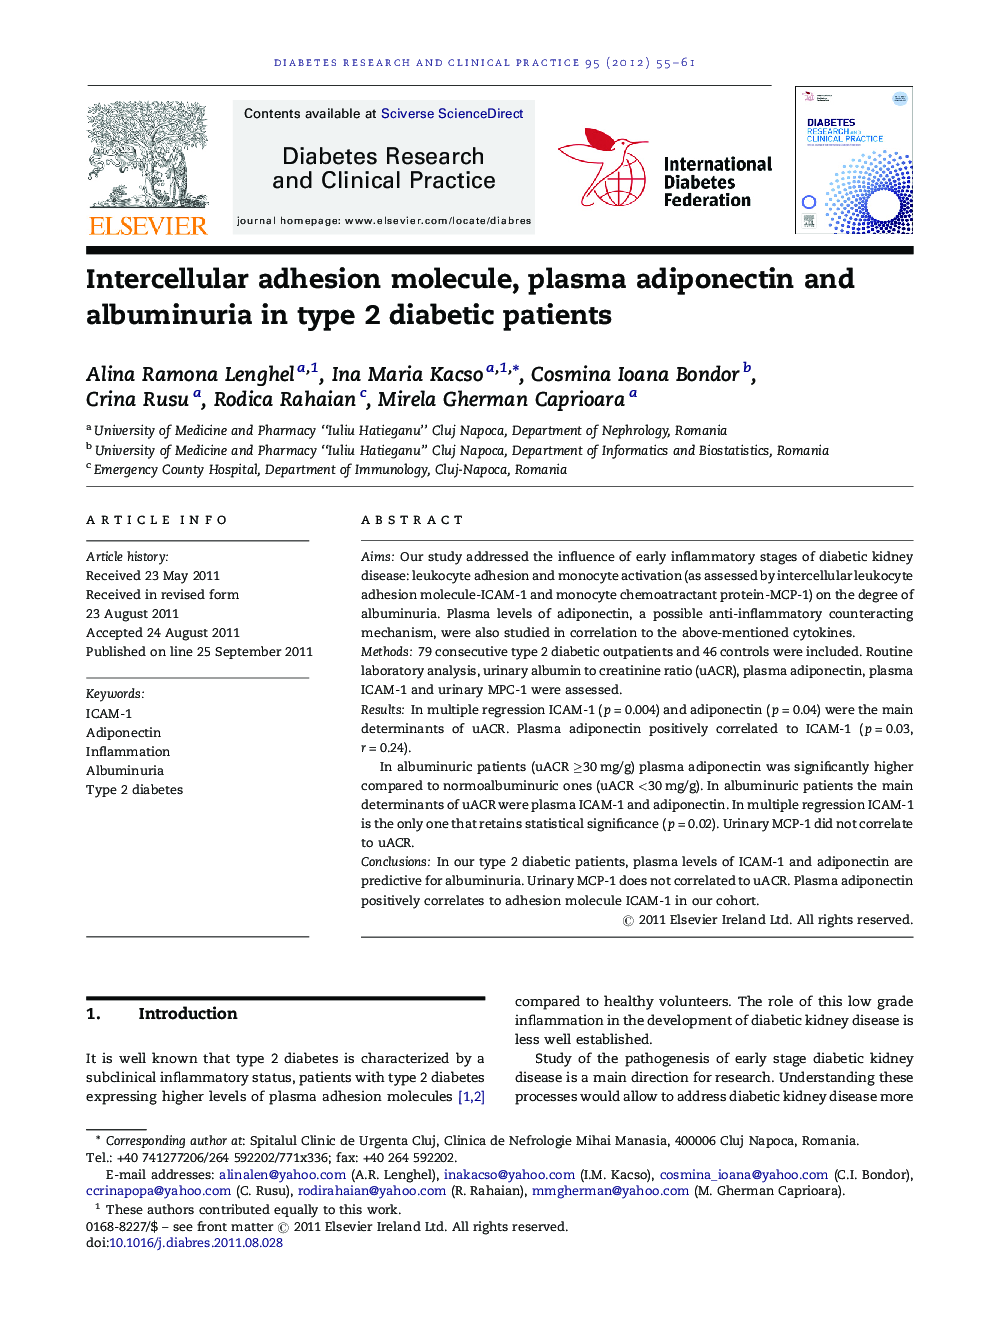 Intercellular adhesion molecule, plasma adiponectin and albuminuria in type 2 diabetic patients